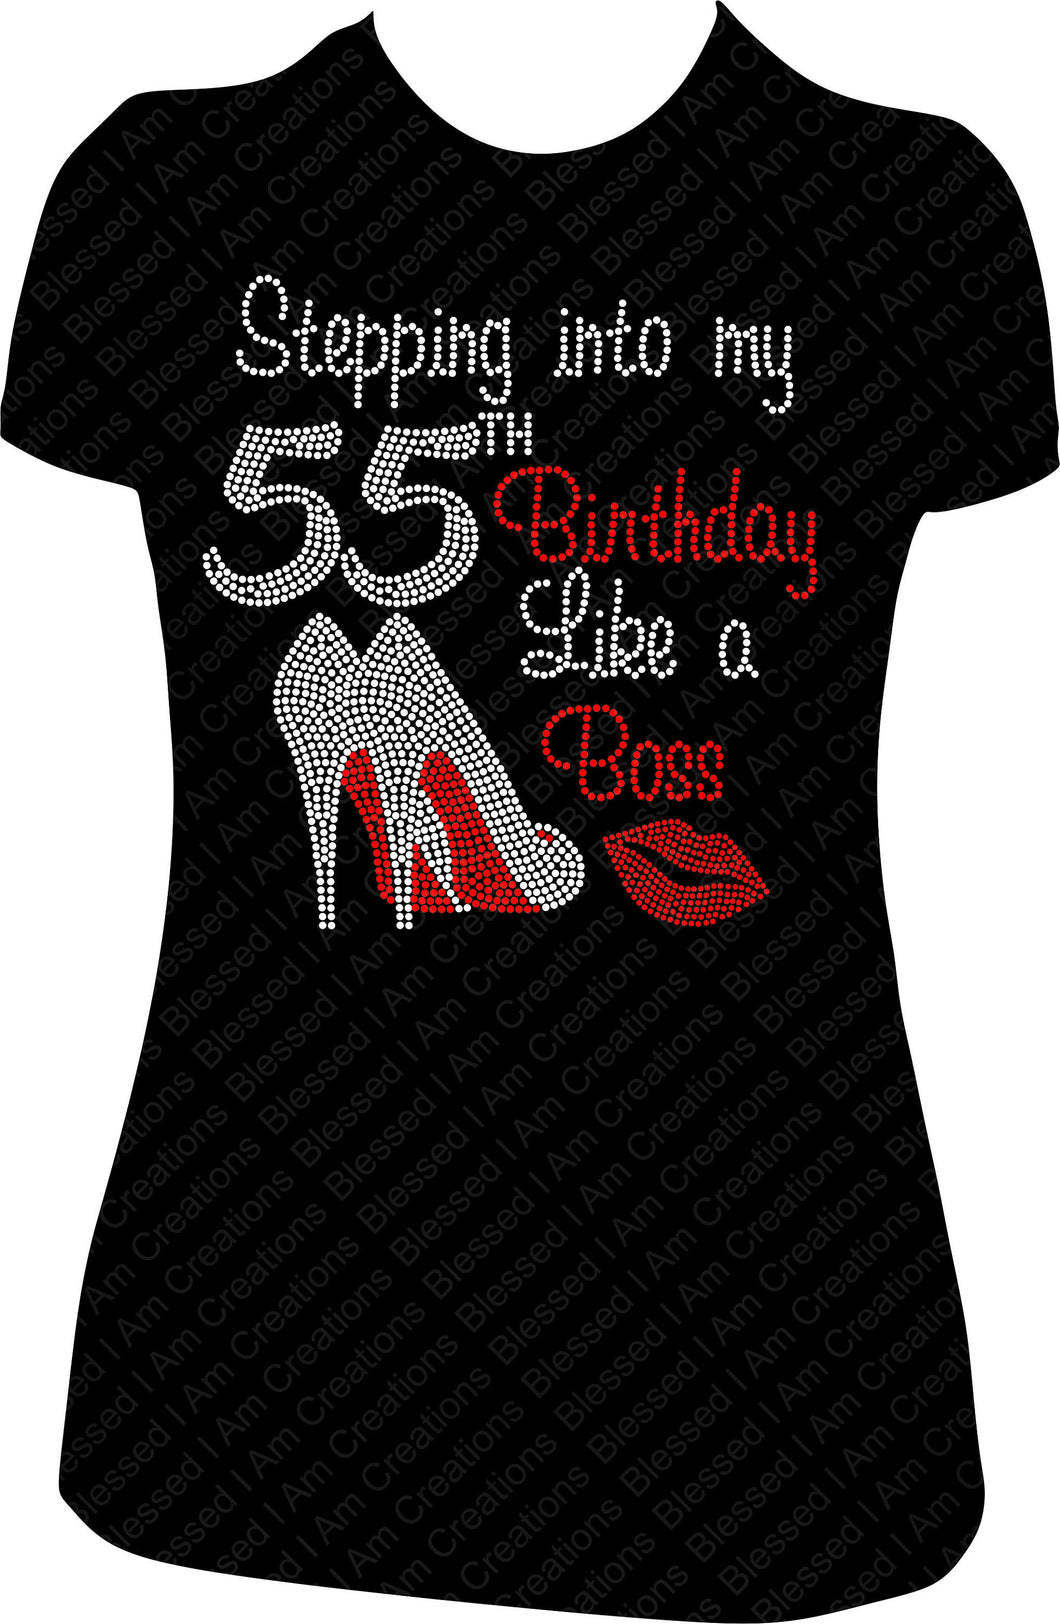 Stepping into my 55th Birthday like a Boss Rhinestone Birthday Shirt